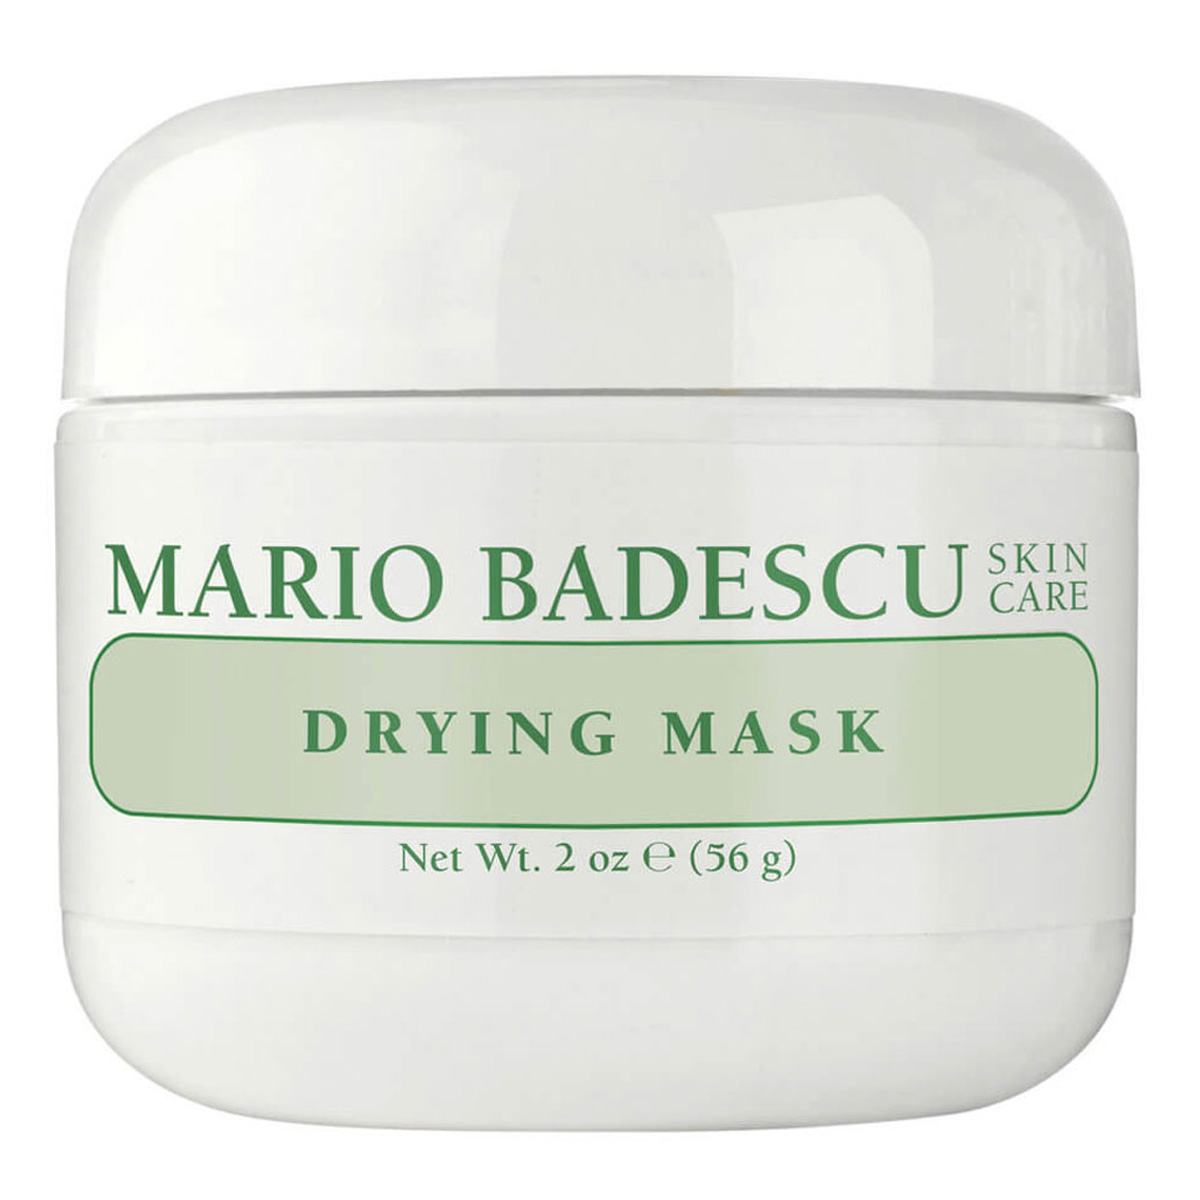 masca-mario-badescu-drying-mask3